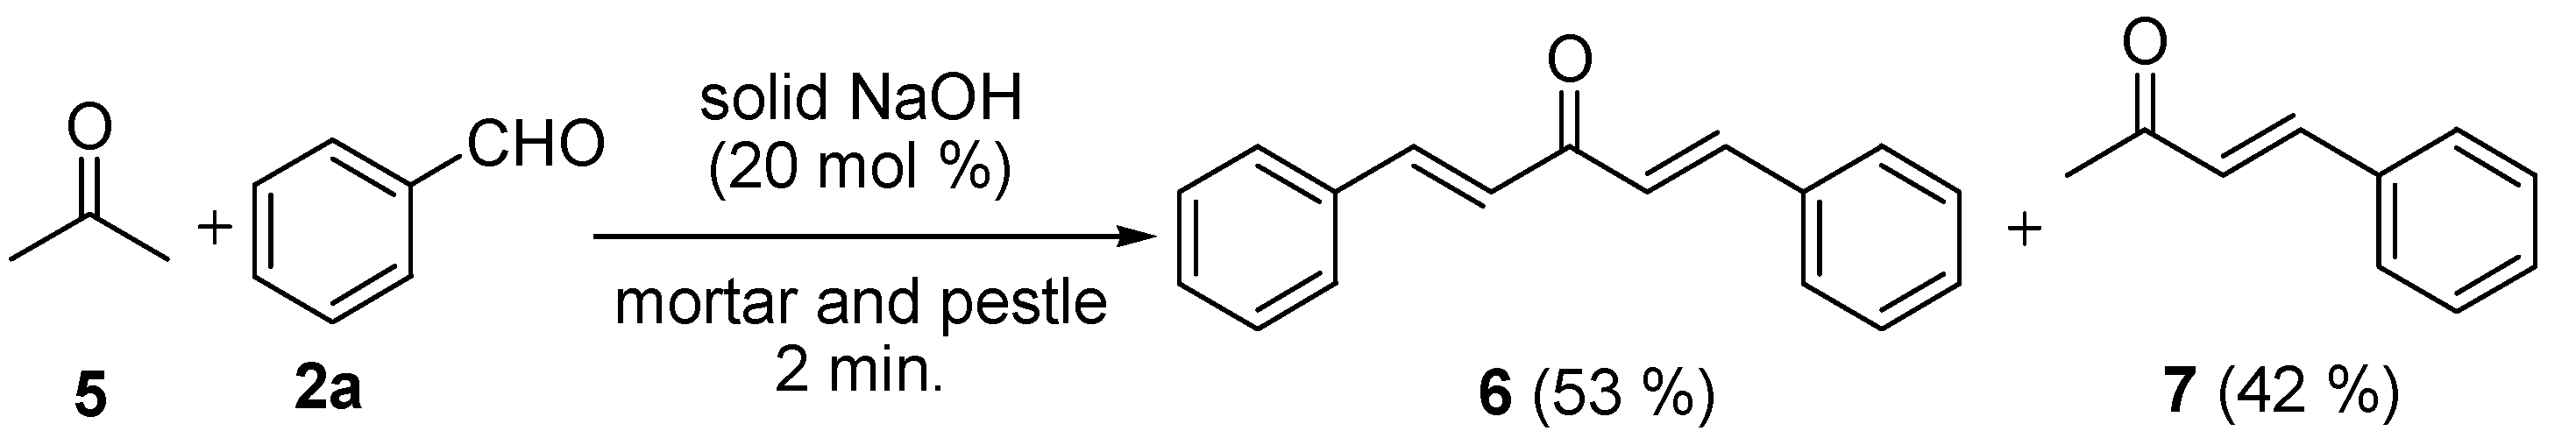 claisen schmidt reaction of benzaldehyde and acetone